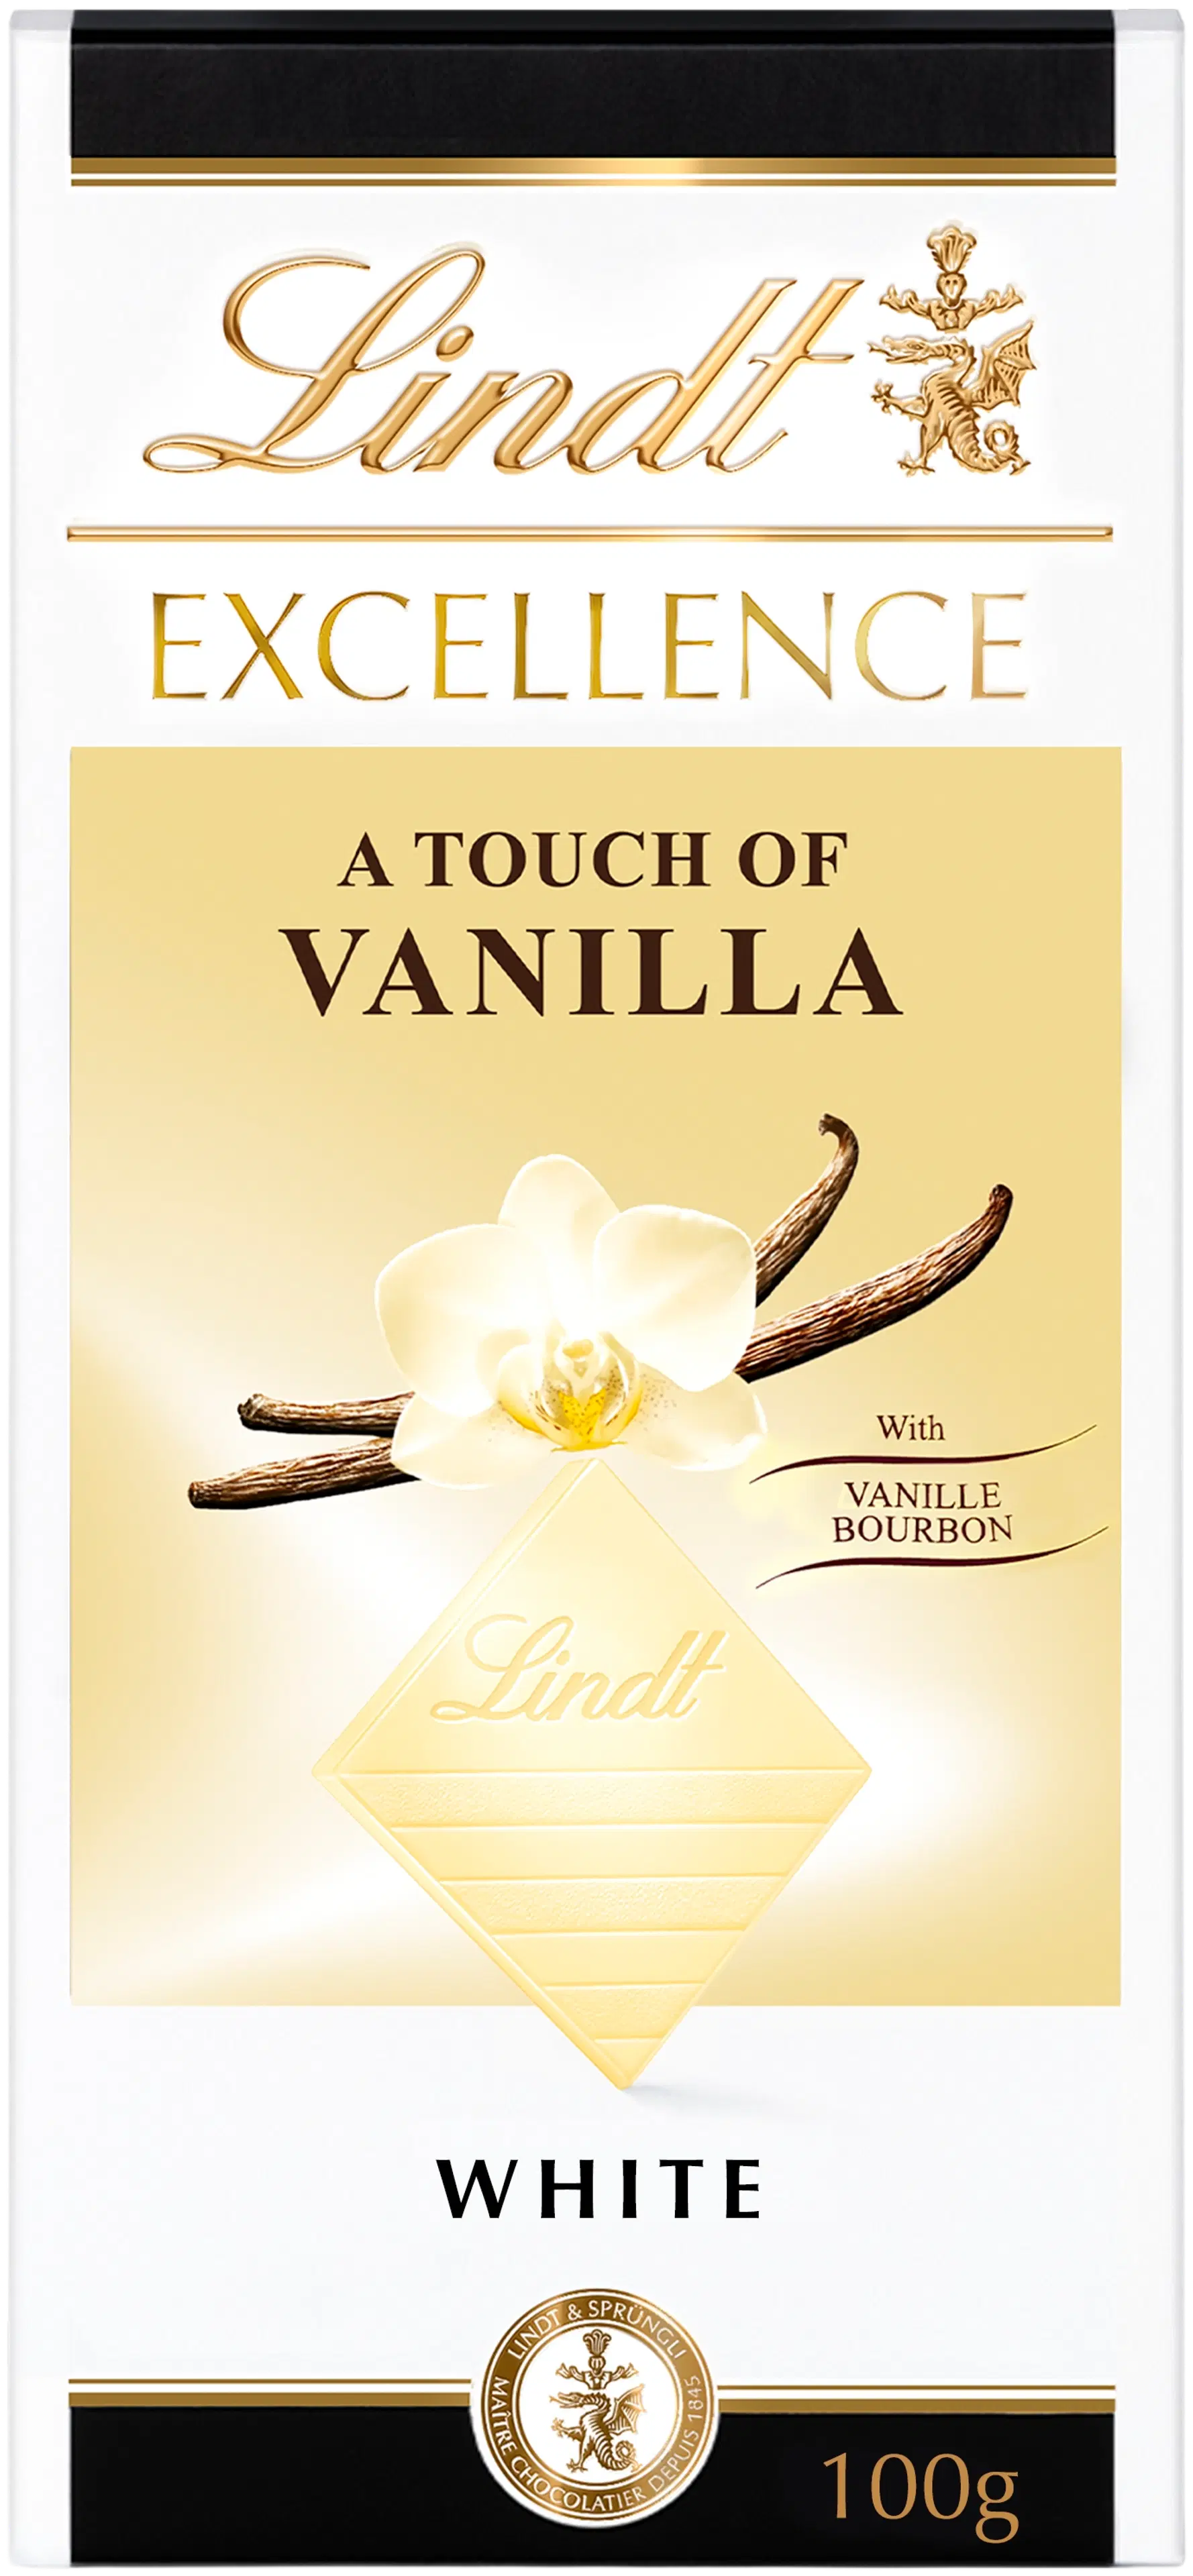 Lindt Excellence White Vanilla valkosuklaalevy 100g